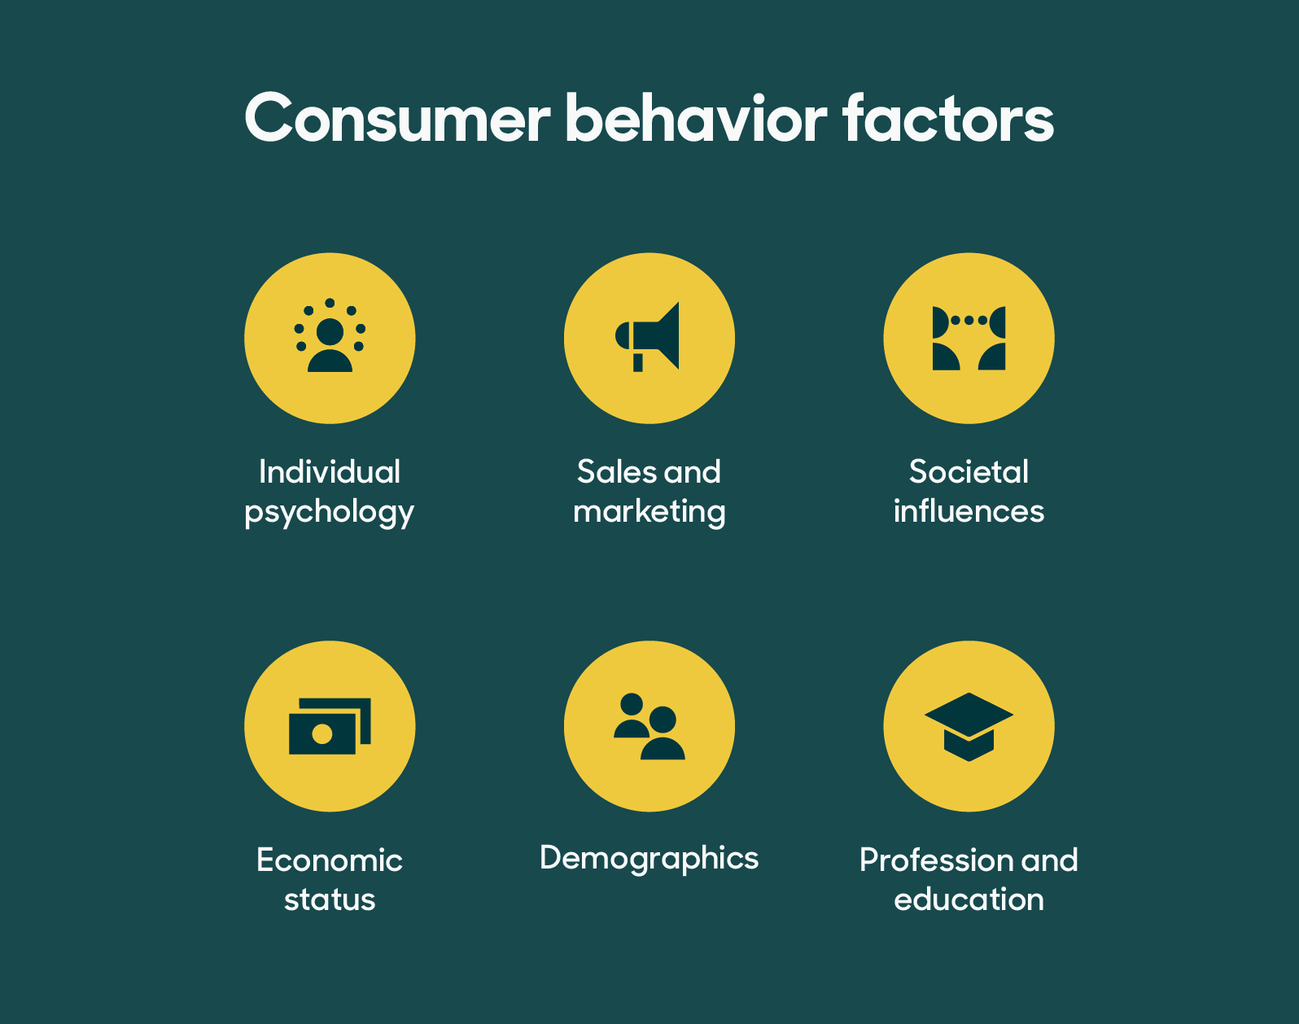 The Psychology of Marketing: Understanding Consumer Behavior